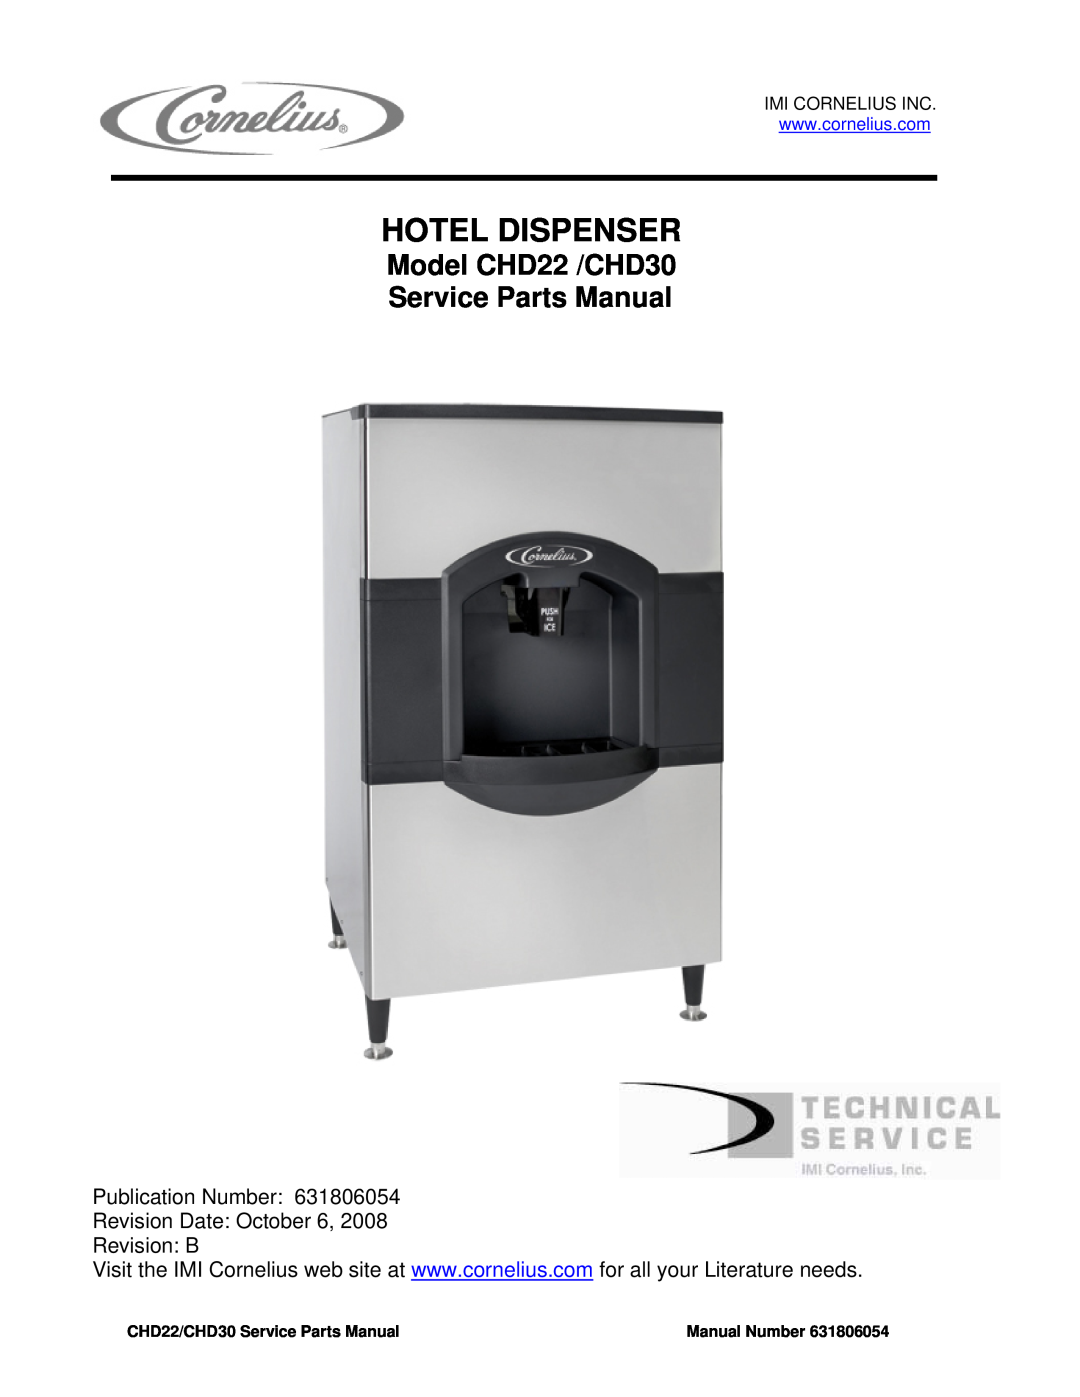 Cornelius manual Hotel Dispenser, Model CHD22 /CHD30 Service Parts Manual, Imi Cornelius Inc, Manual Number 